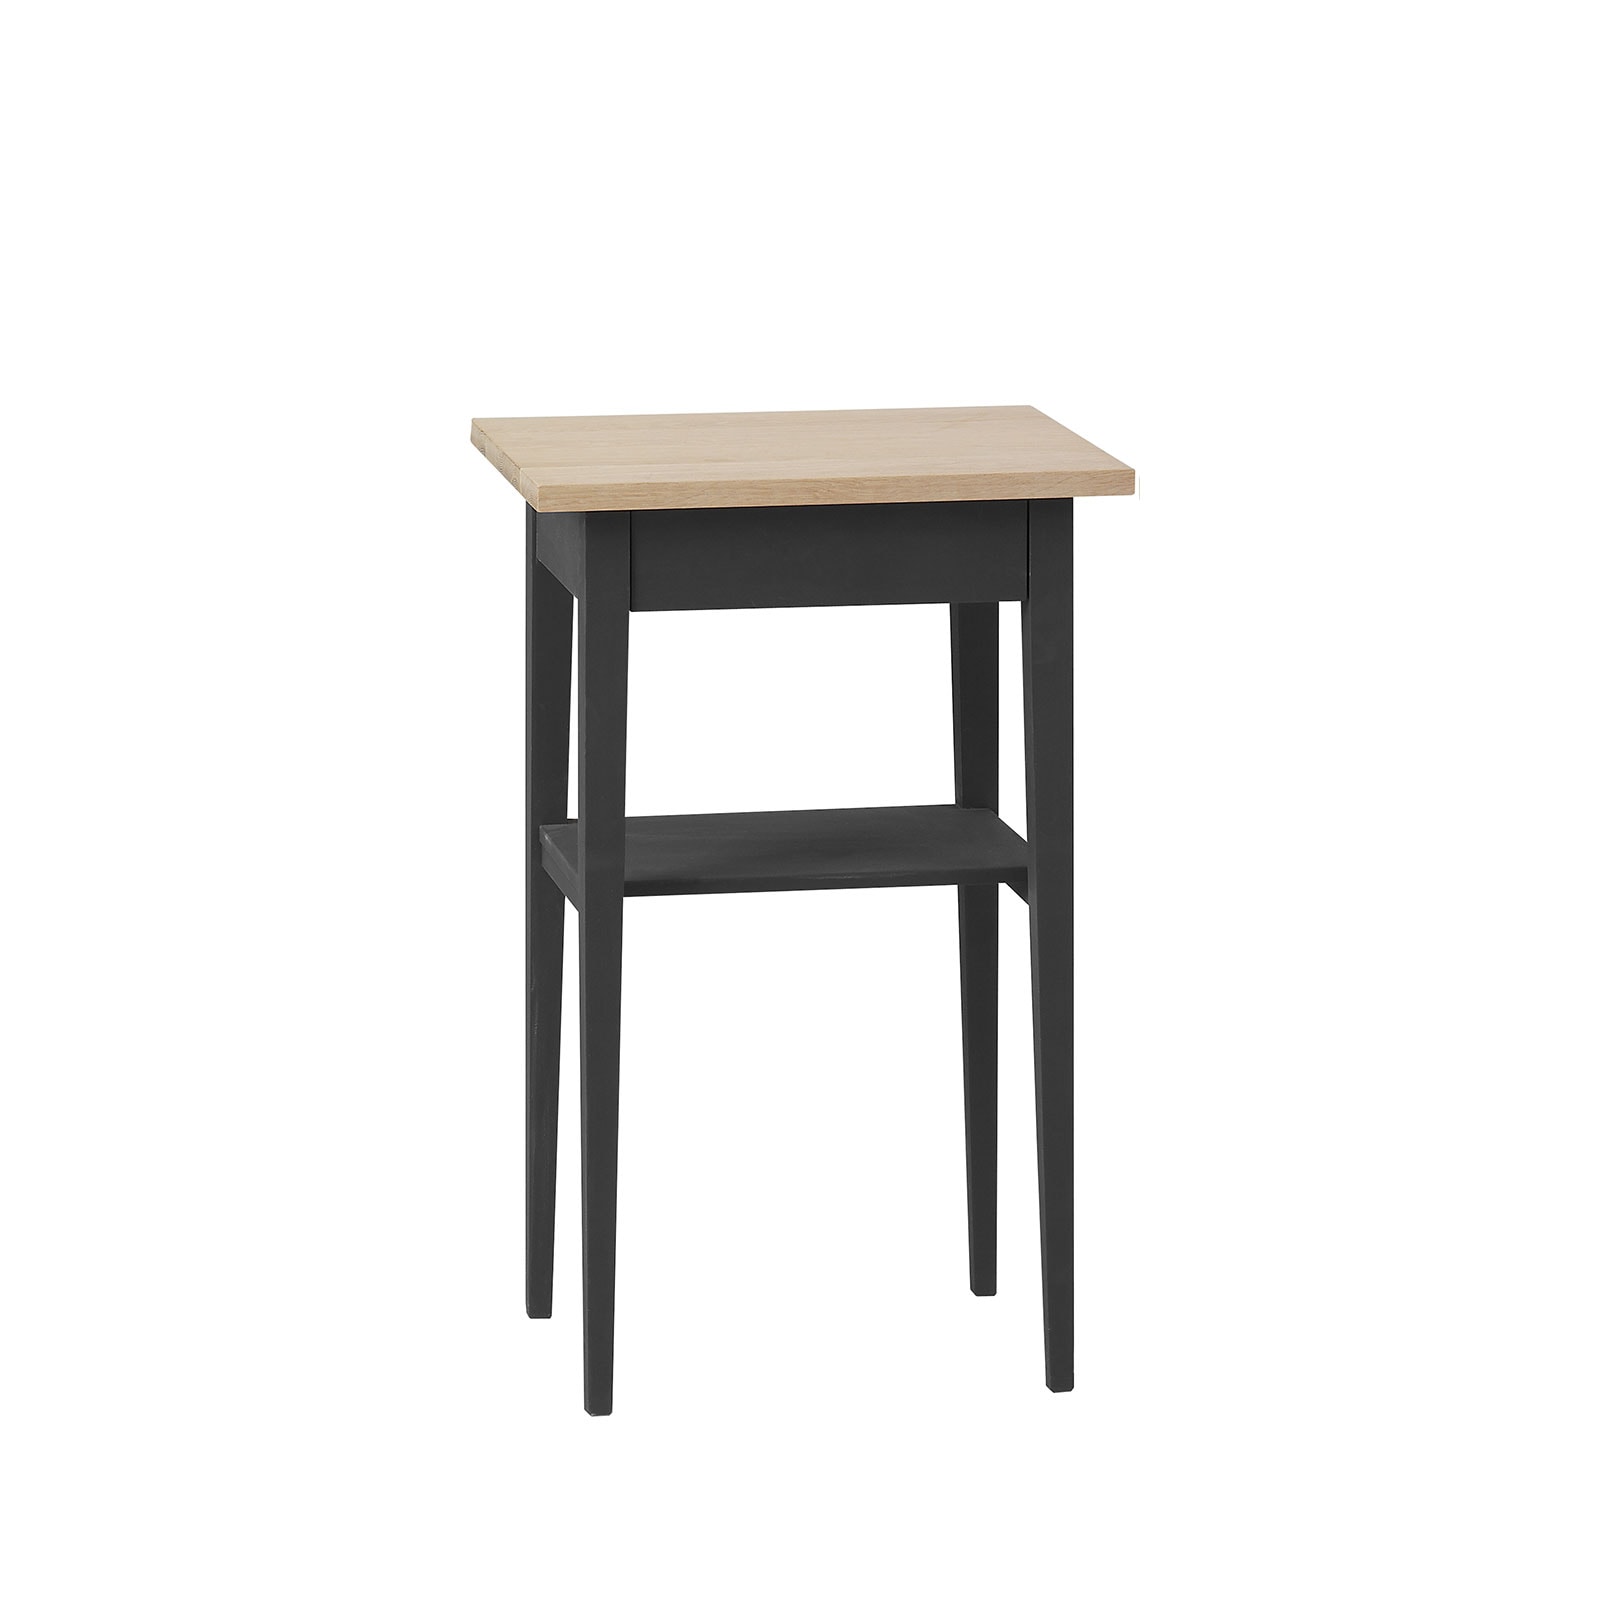 Litet bord med låda Stor skiva ek vitolja/såpa Temperakulör grafit94 Norrgavel